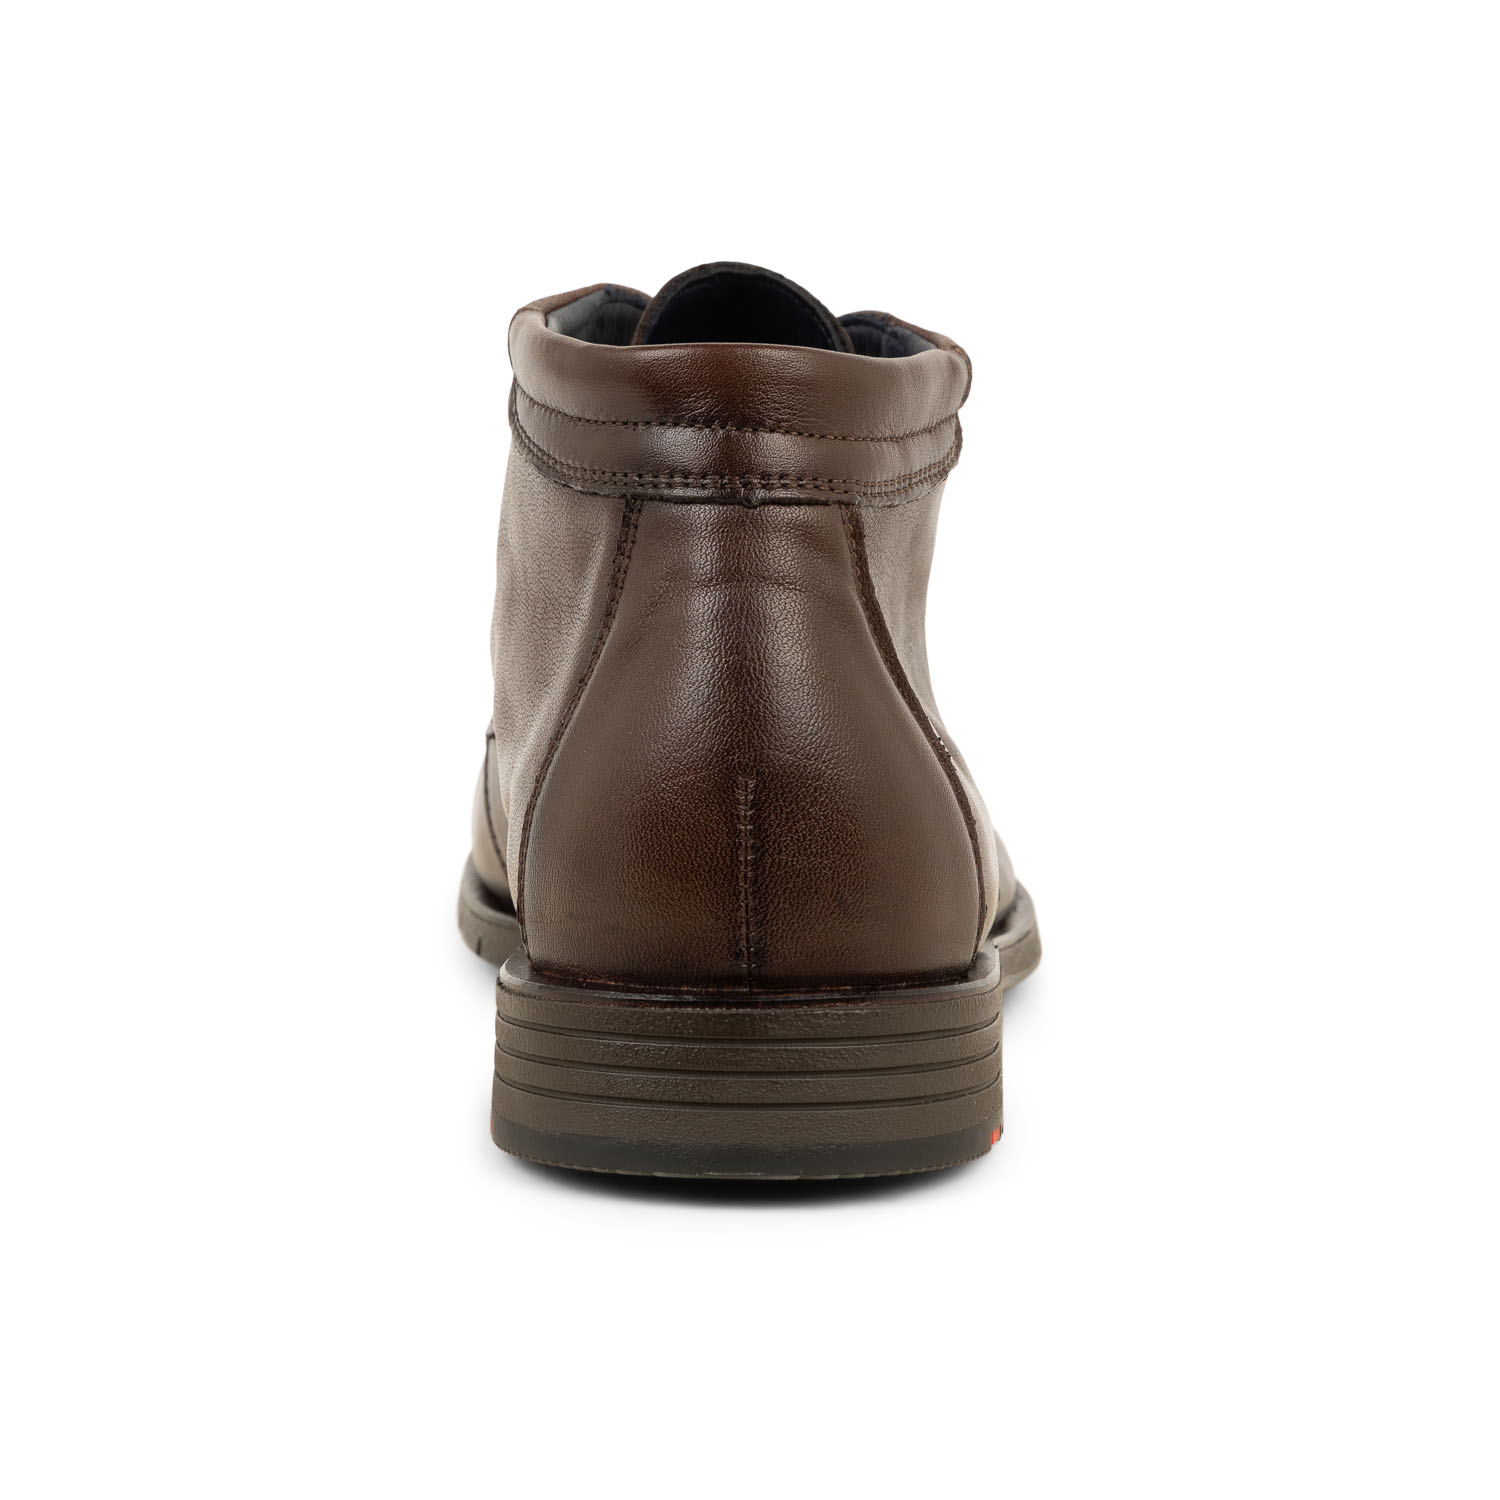 03 - TAMAR - LLOYD - Boots et bottines - Cuir